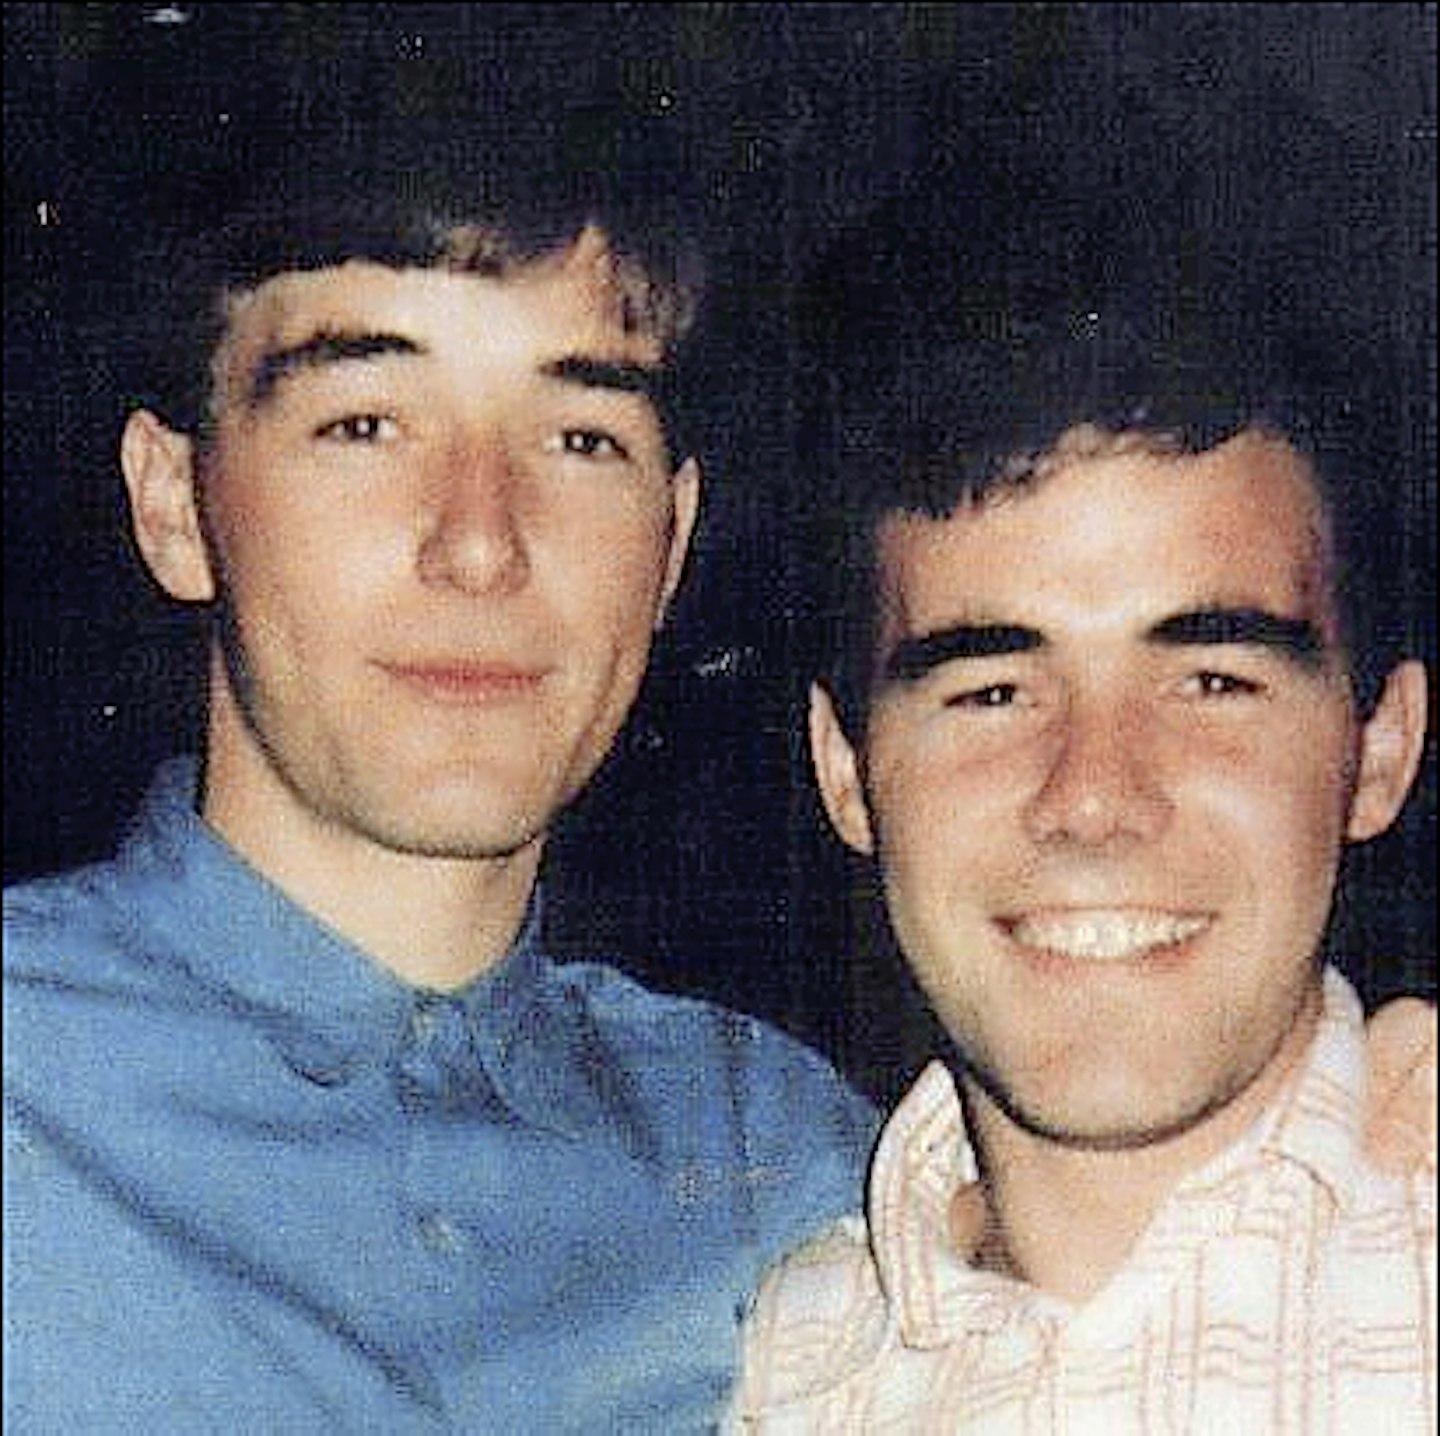 Ian (left) and Joe